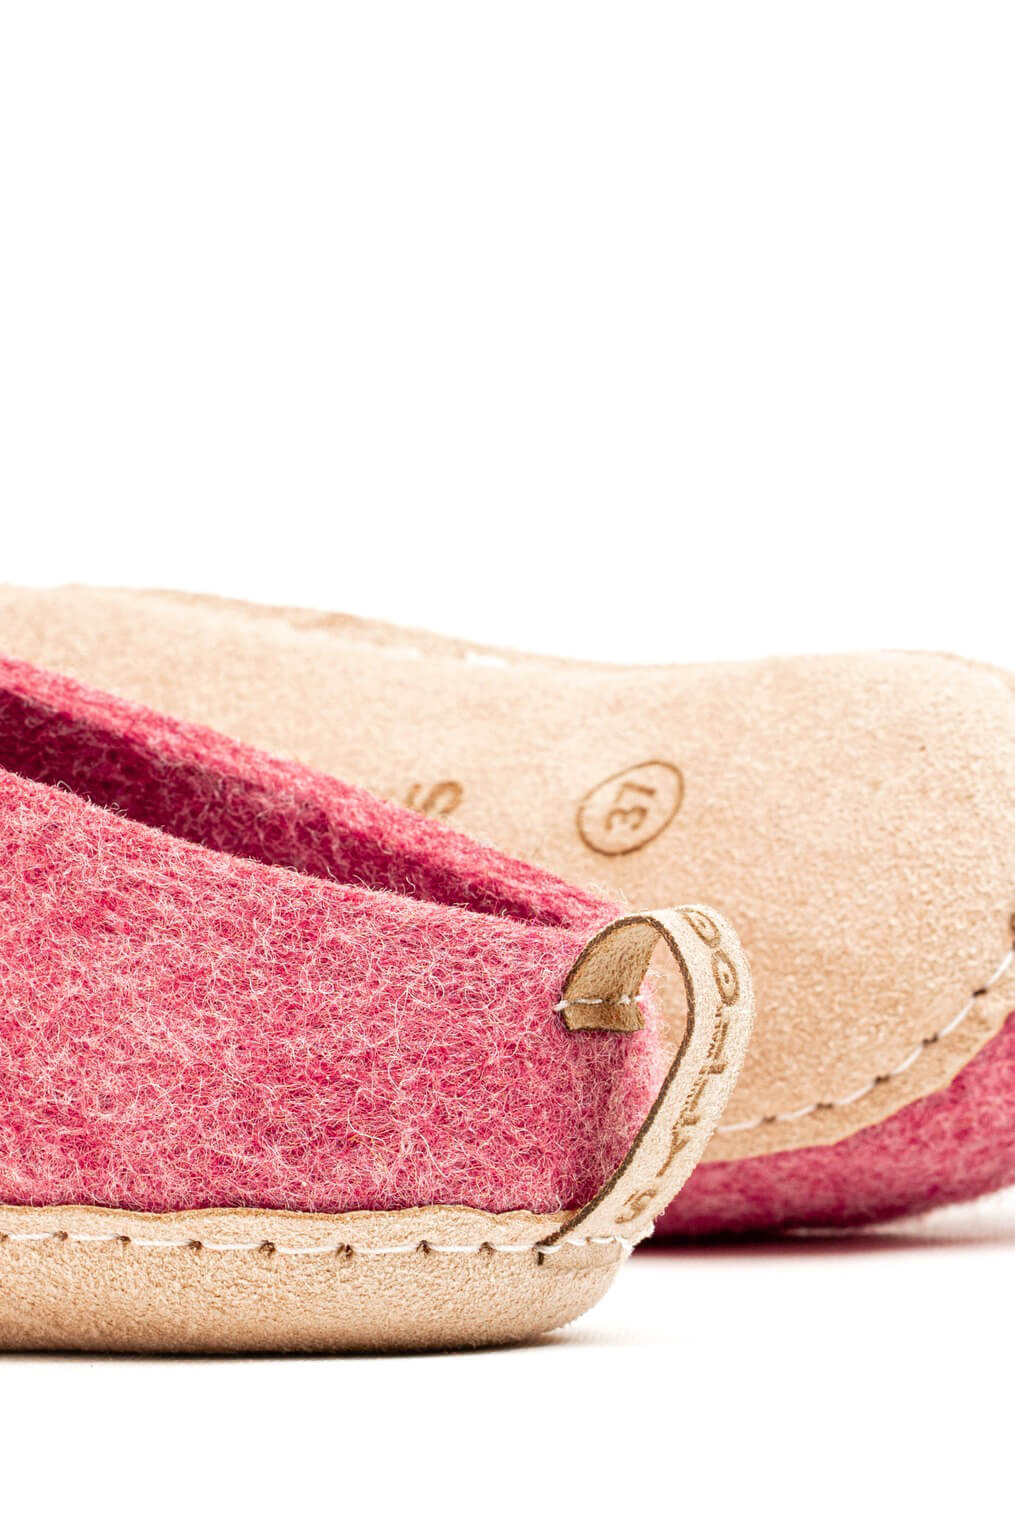 Indoor Open Heel Slippers With Leather Sole - Cherry Pink